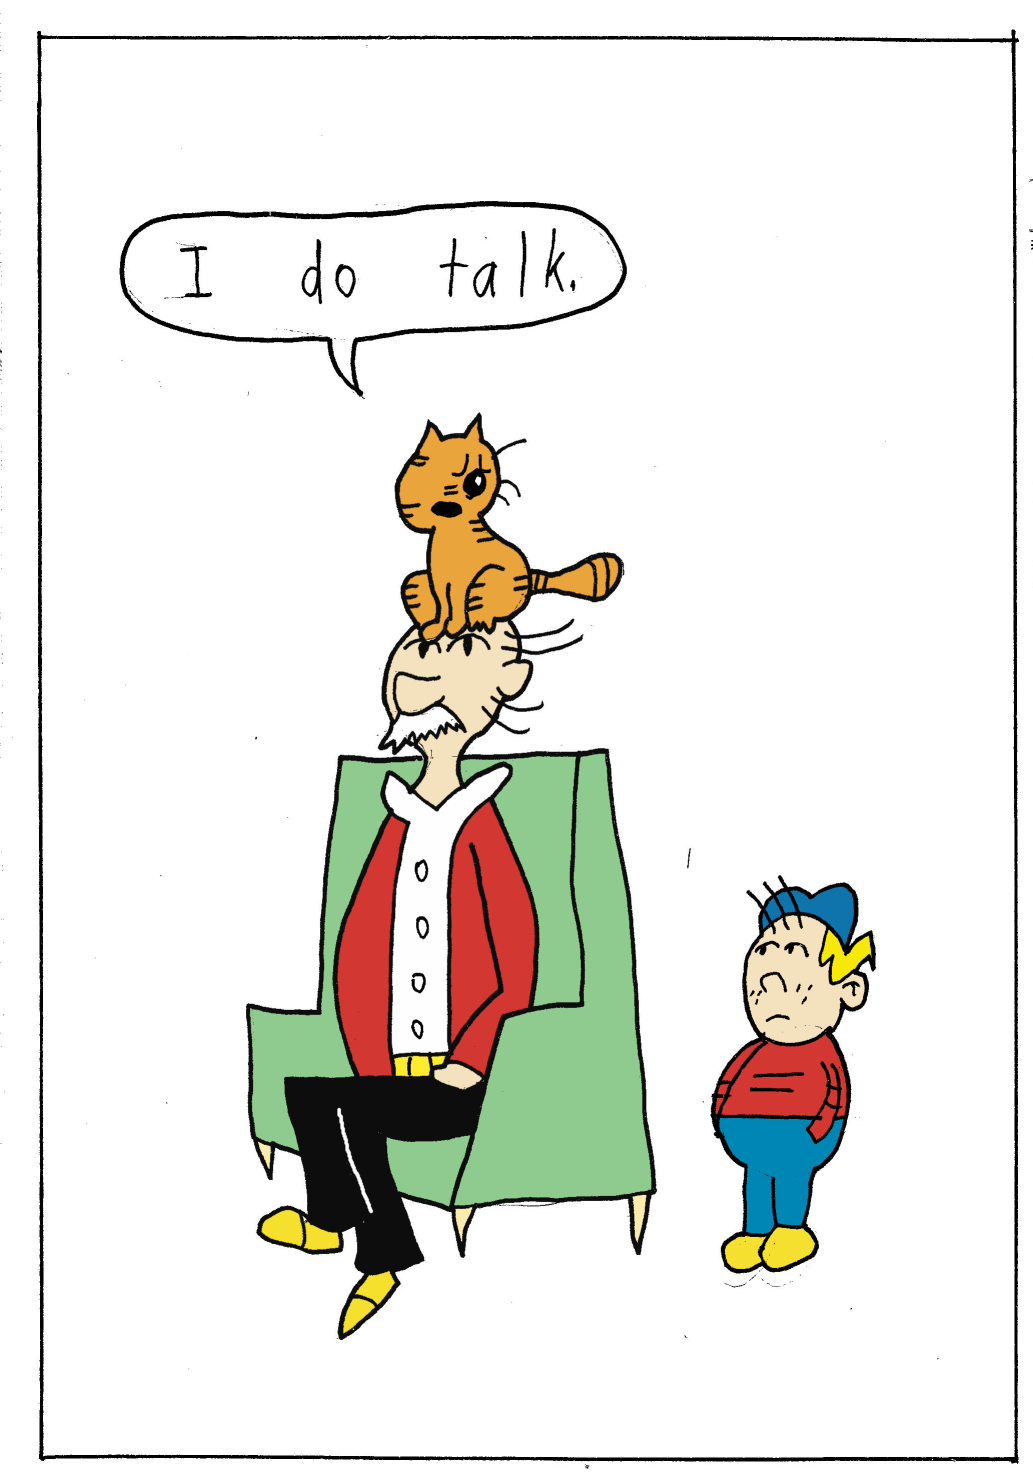 Heathcliff responds: I do talk.